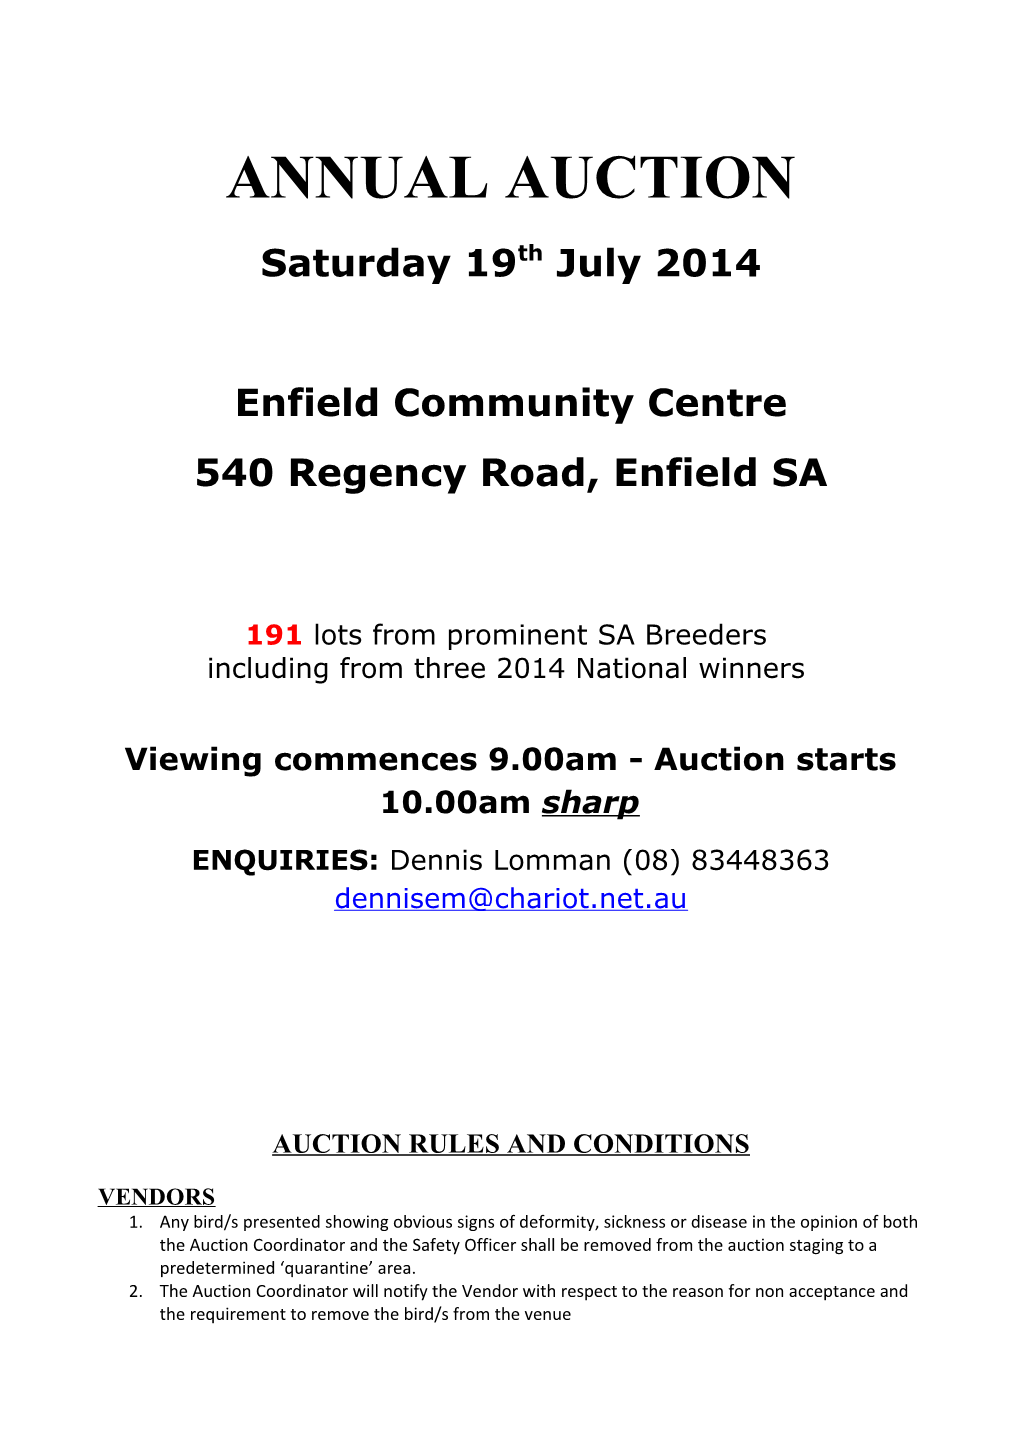 Enfield Community Centre